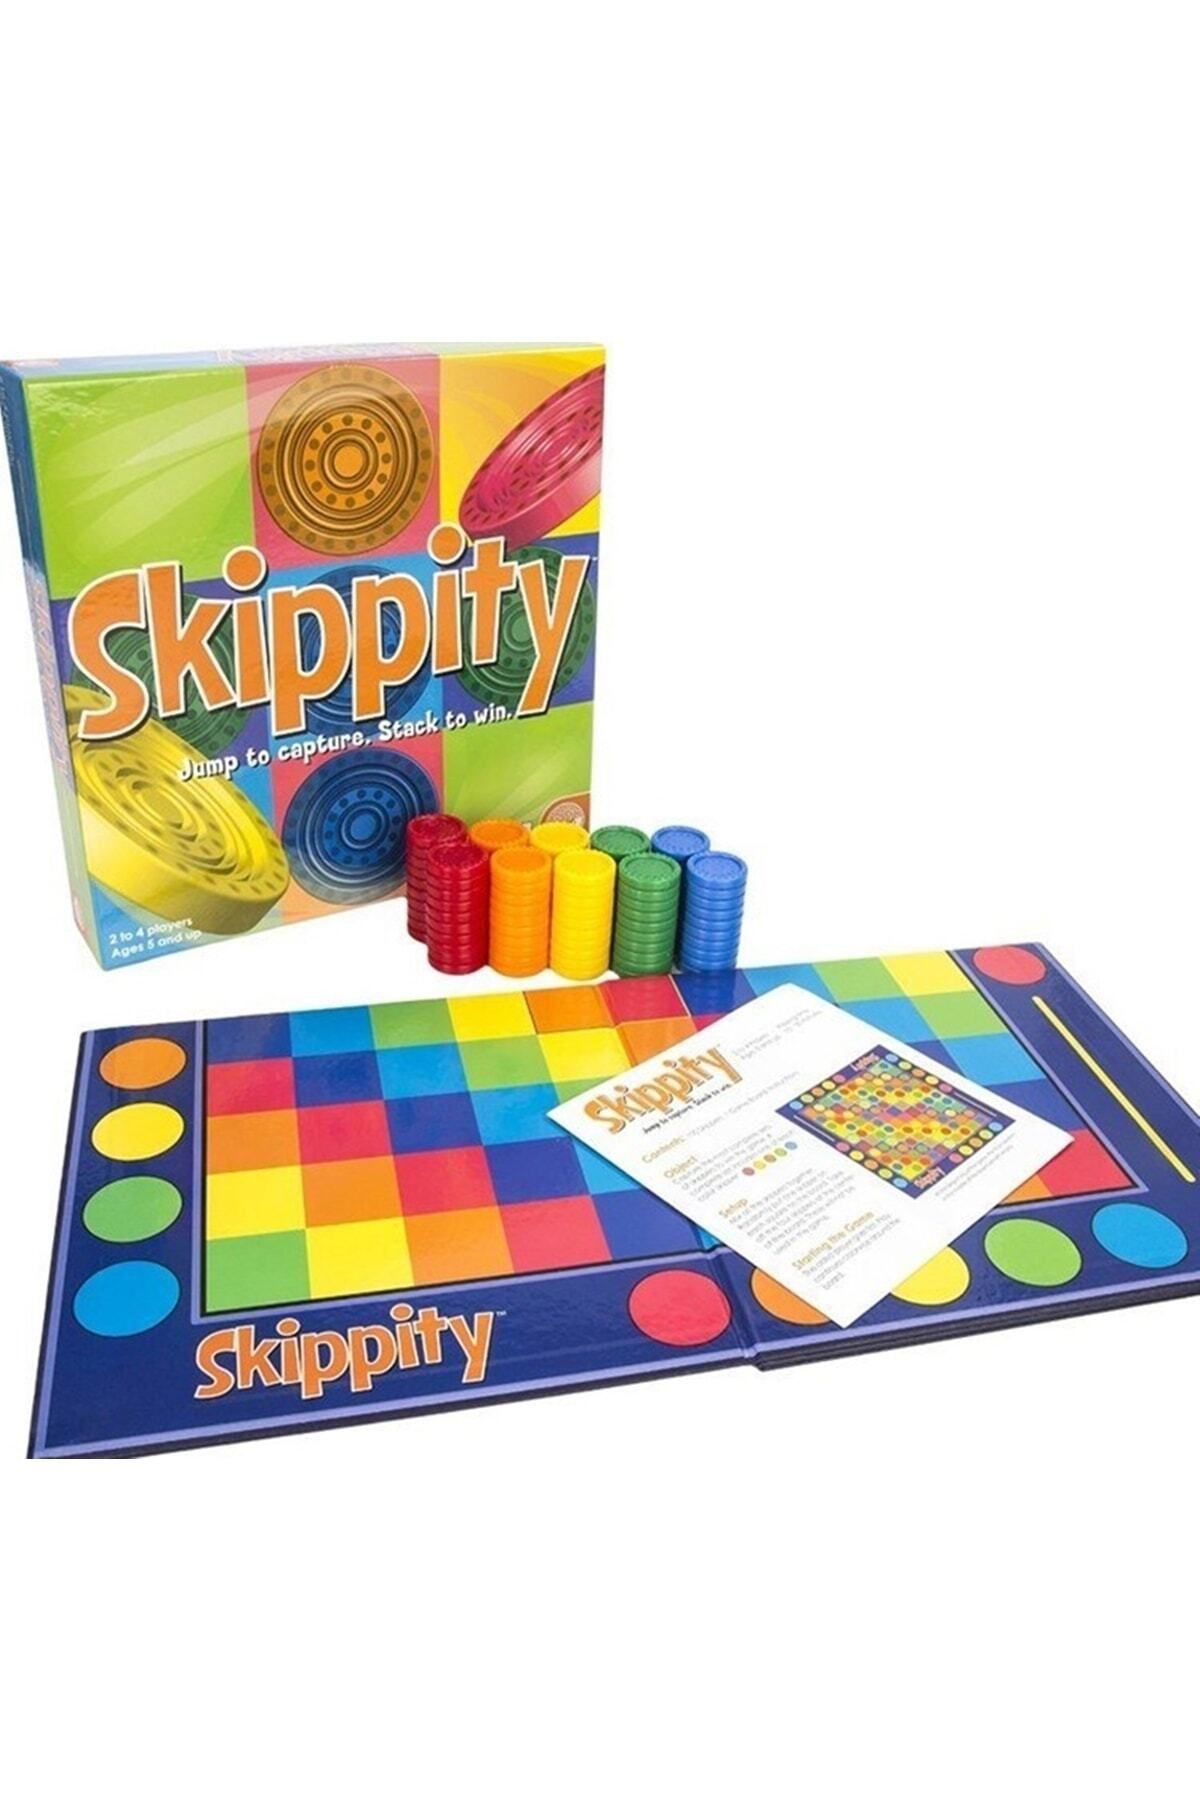 GLUK GLUK Skippity Akıl Zeka Ve Aile Oyunu